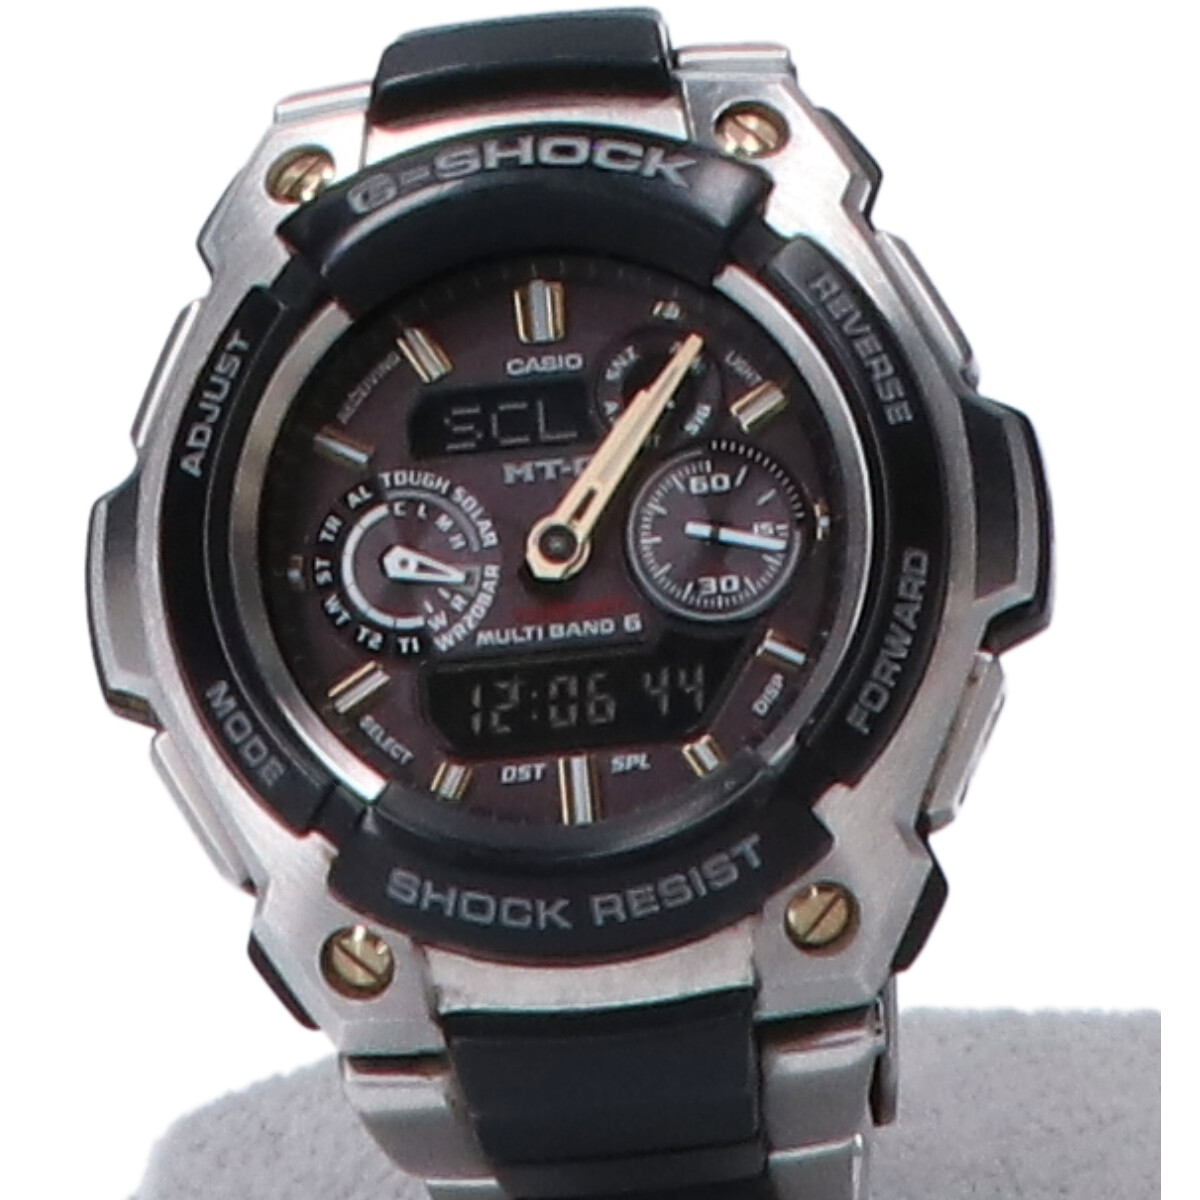 G-SHOCKのMTG-1500-1AJF MT-G マルチバンド6 タフソーラー電波腕時計の買取実績です。